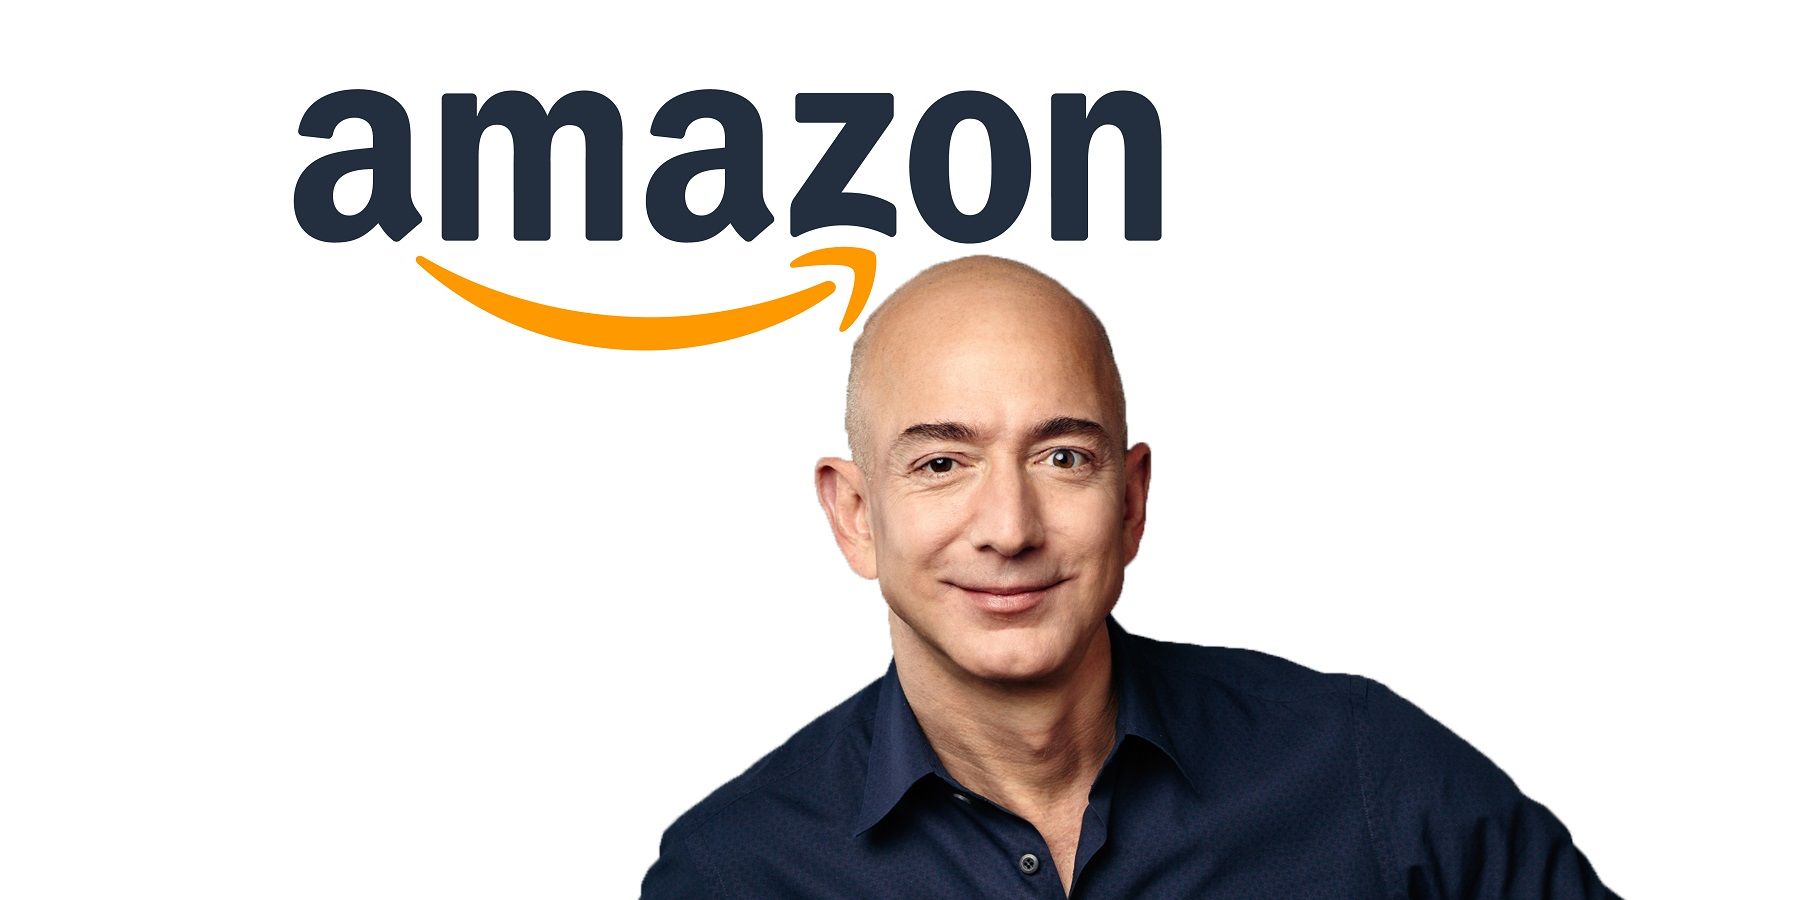 Bezos and Amazon